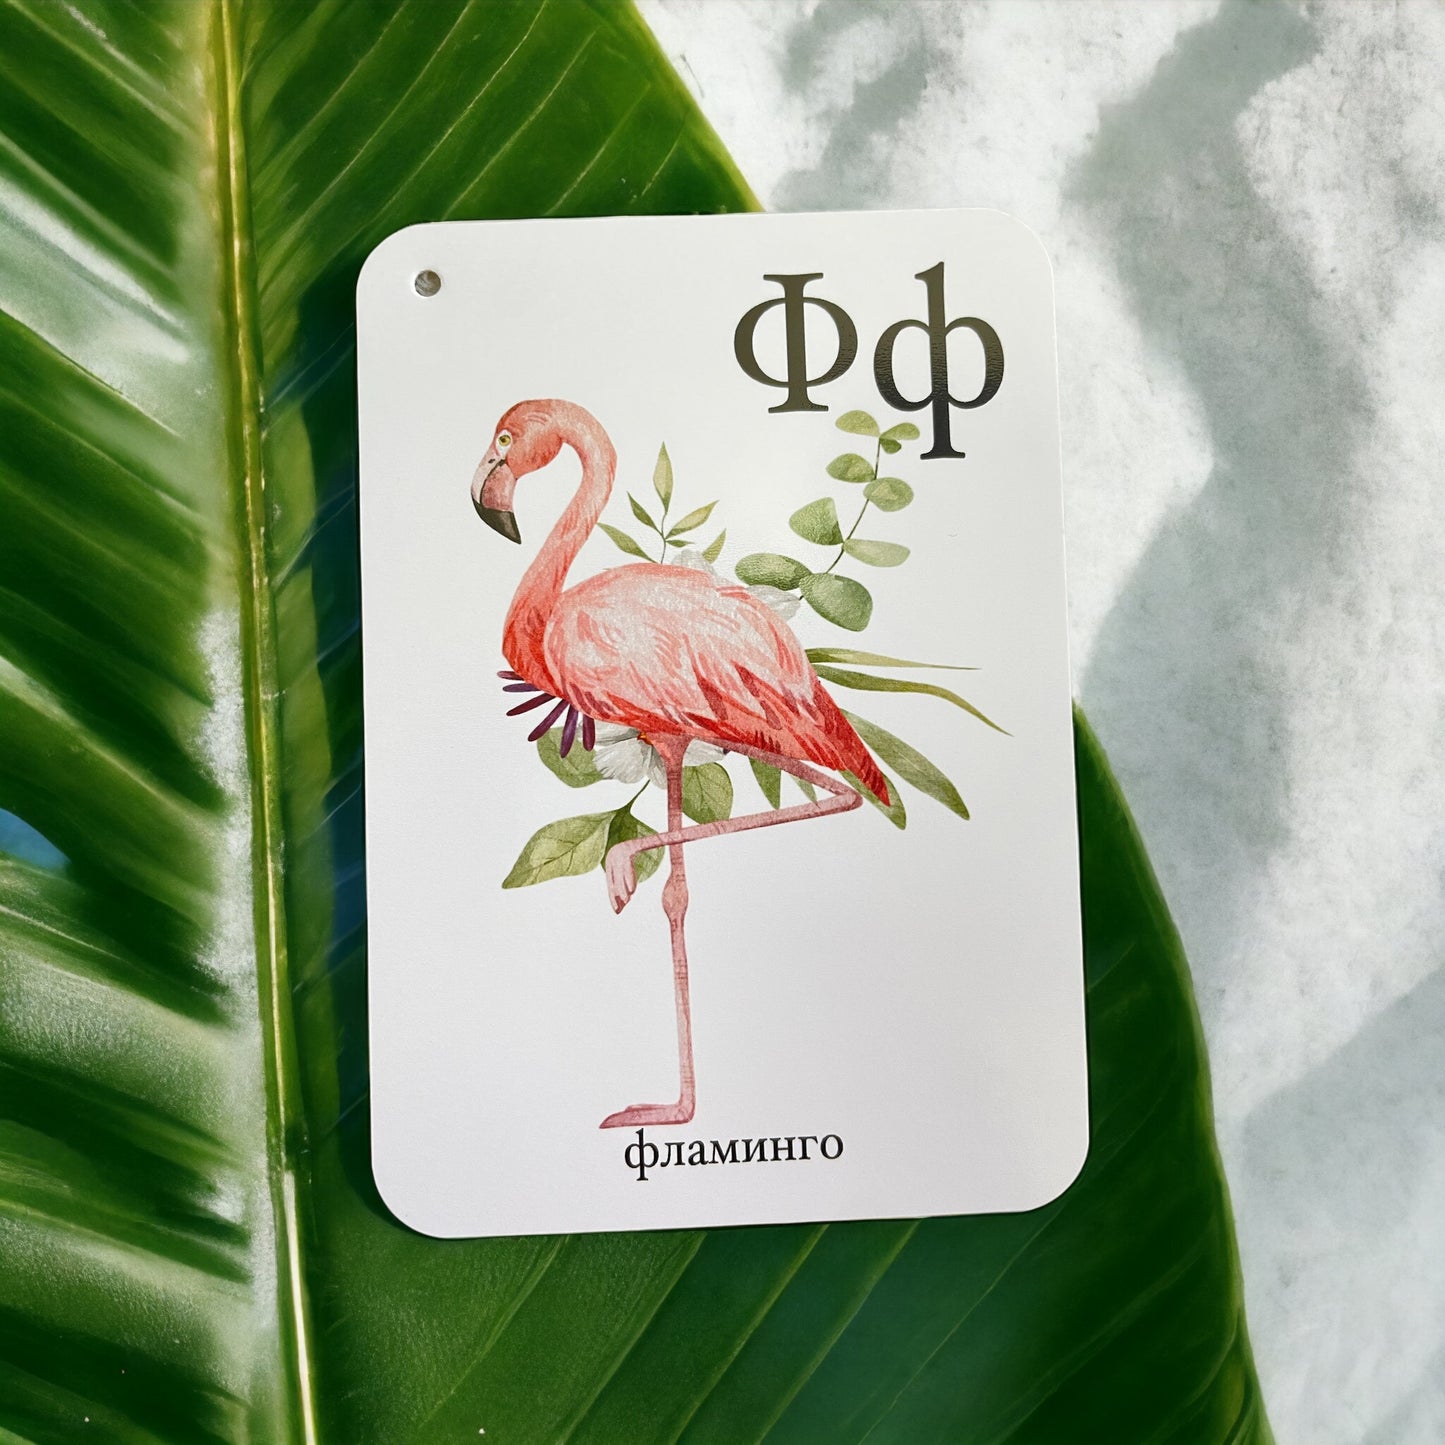 Russian Alphabet Flash Cards